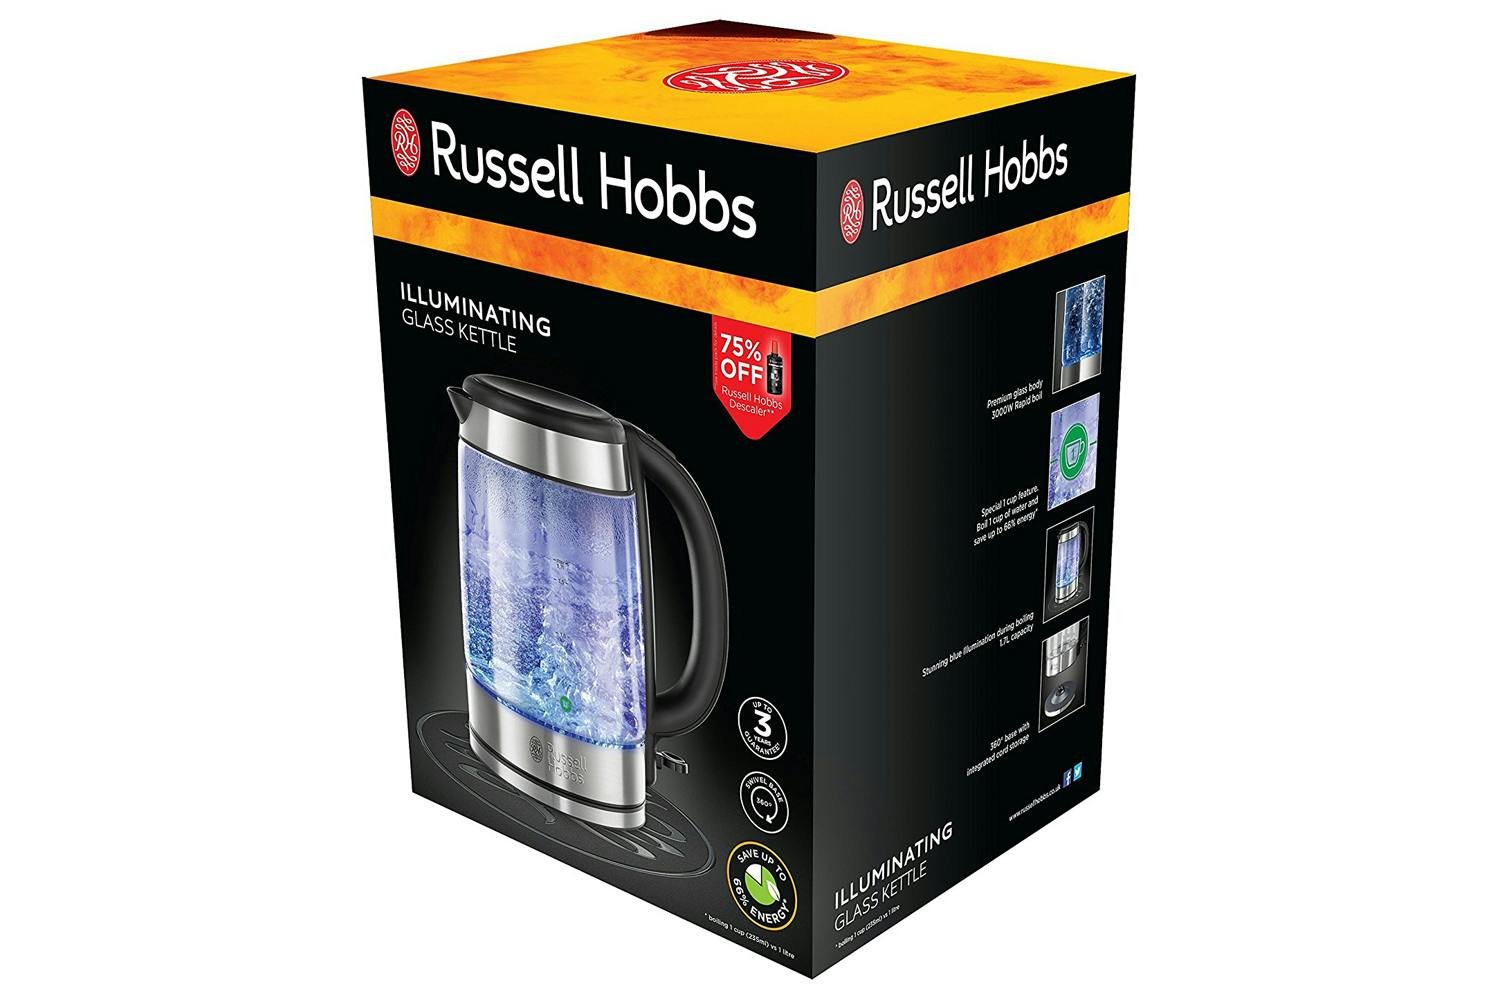 Russell Hobbs 21600 Illuminating Glass Kettle, 1.7 L - Bl https